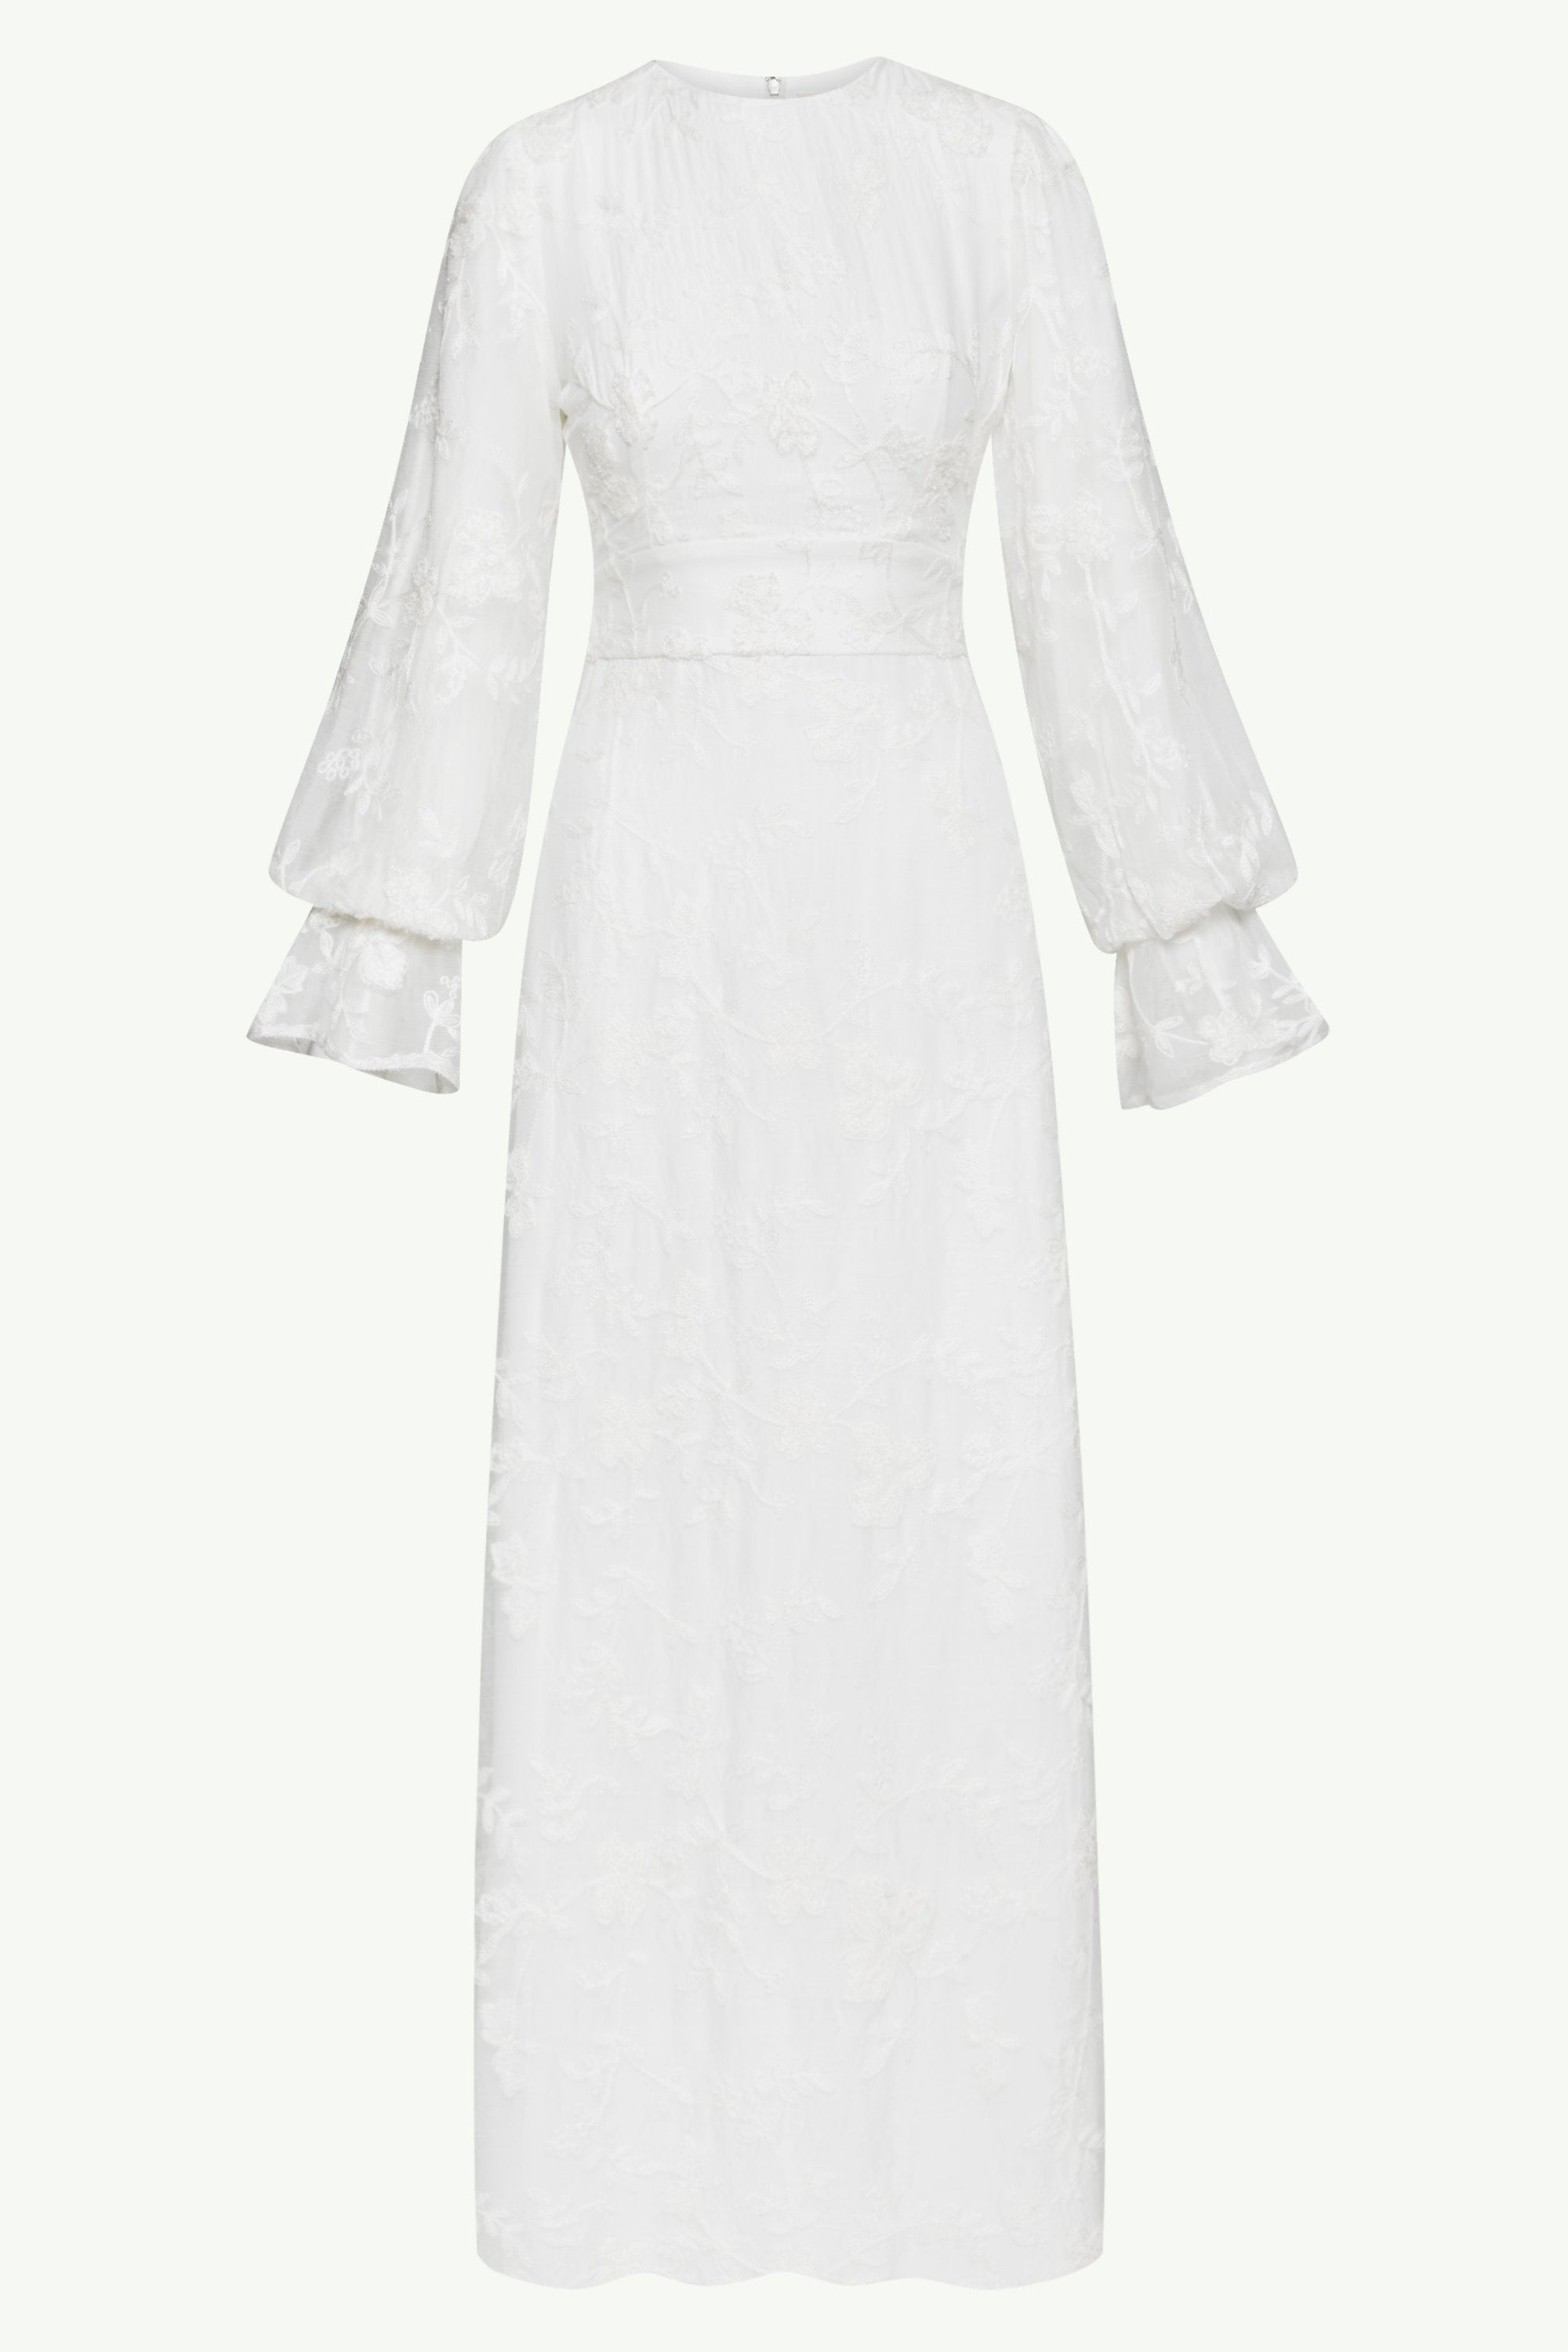 Romaissa White Lace Maxi Dress Clothing Veiled 